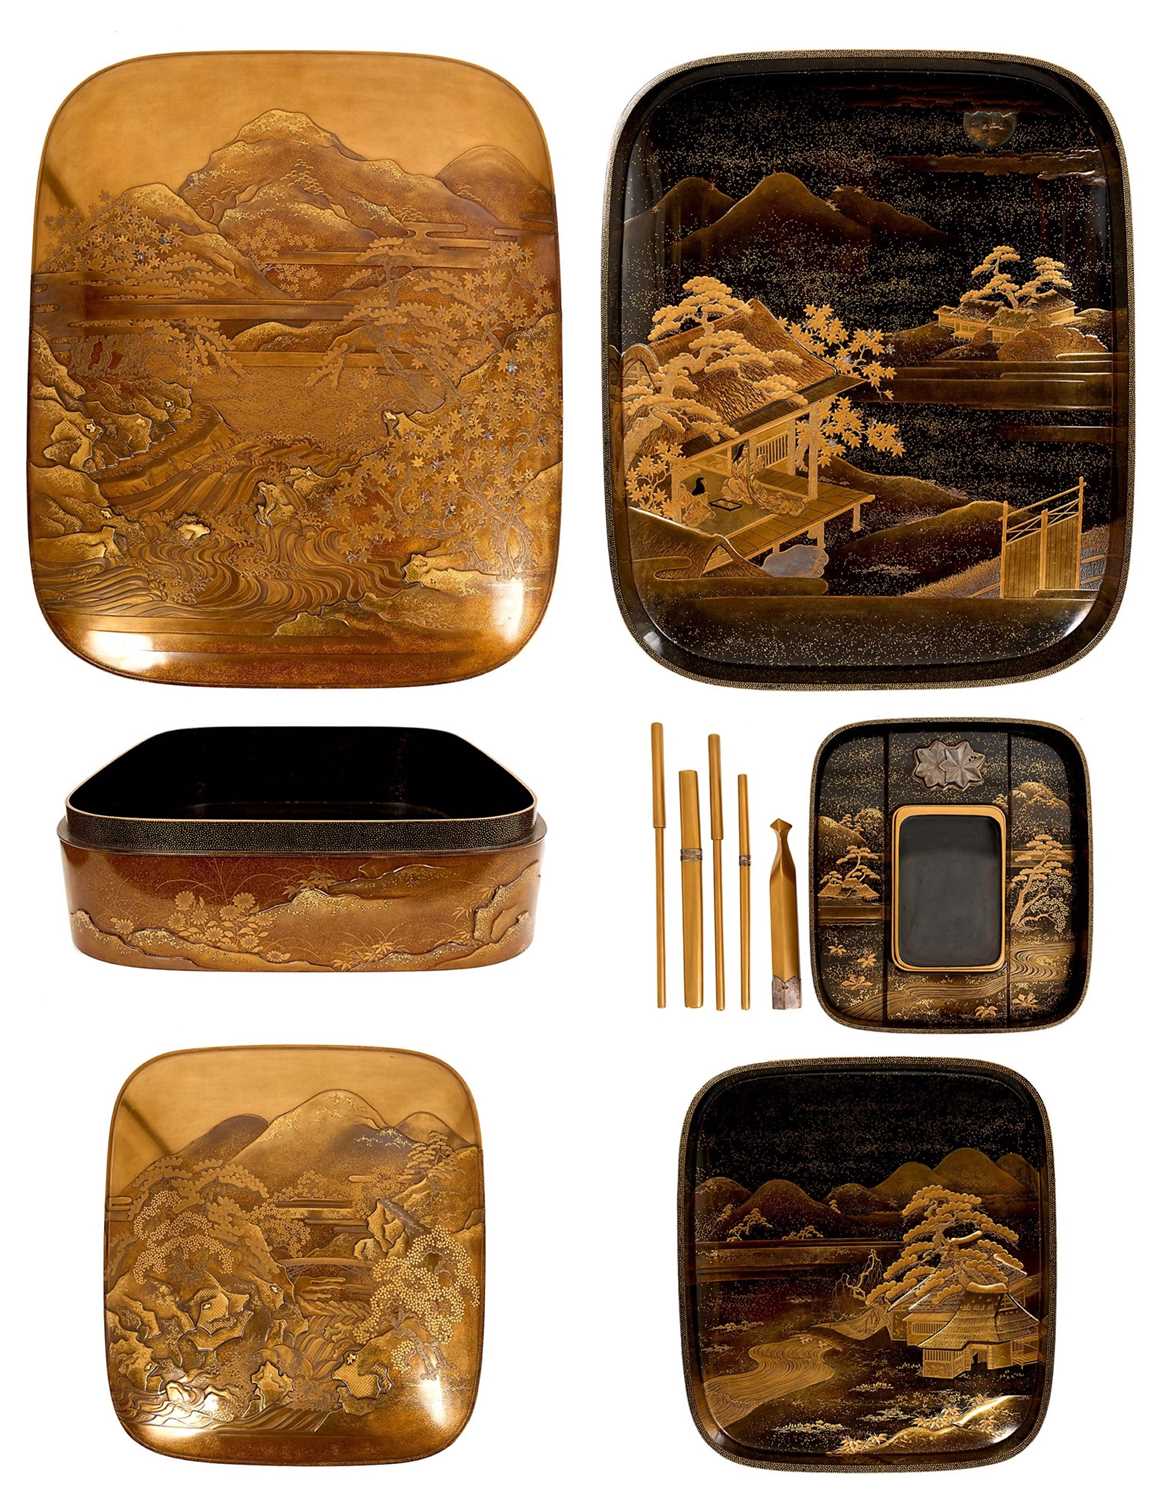 Superb matching set of a gold lacquer ryoshibako and suzuribako, Meiji Period